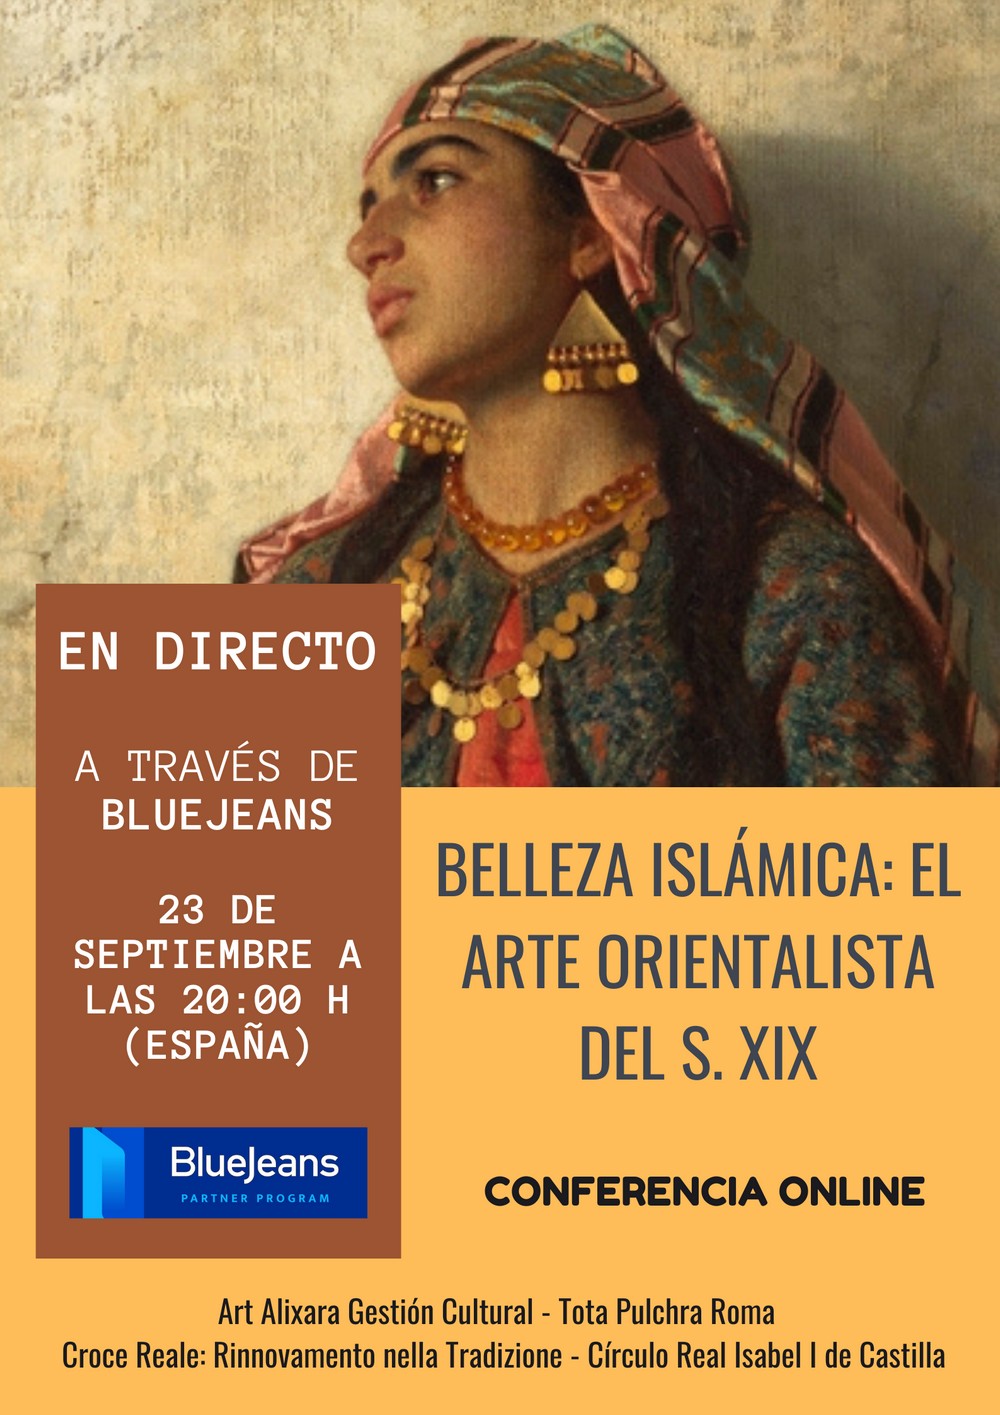 Conferencia Online “Belleza Islámica: el Arte Orientalista del s. XIX”